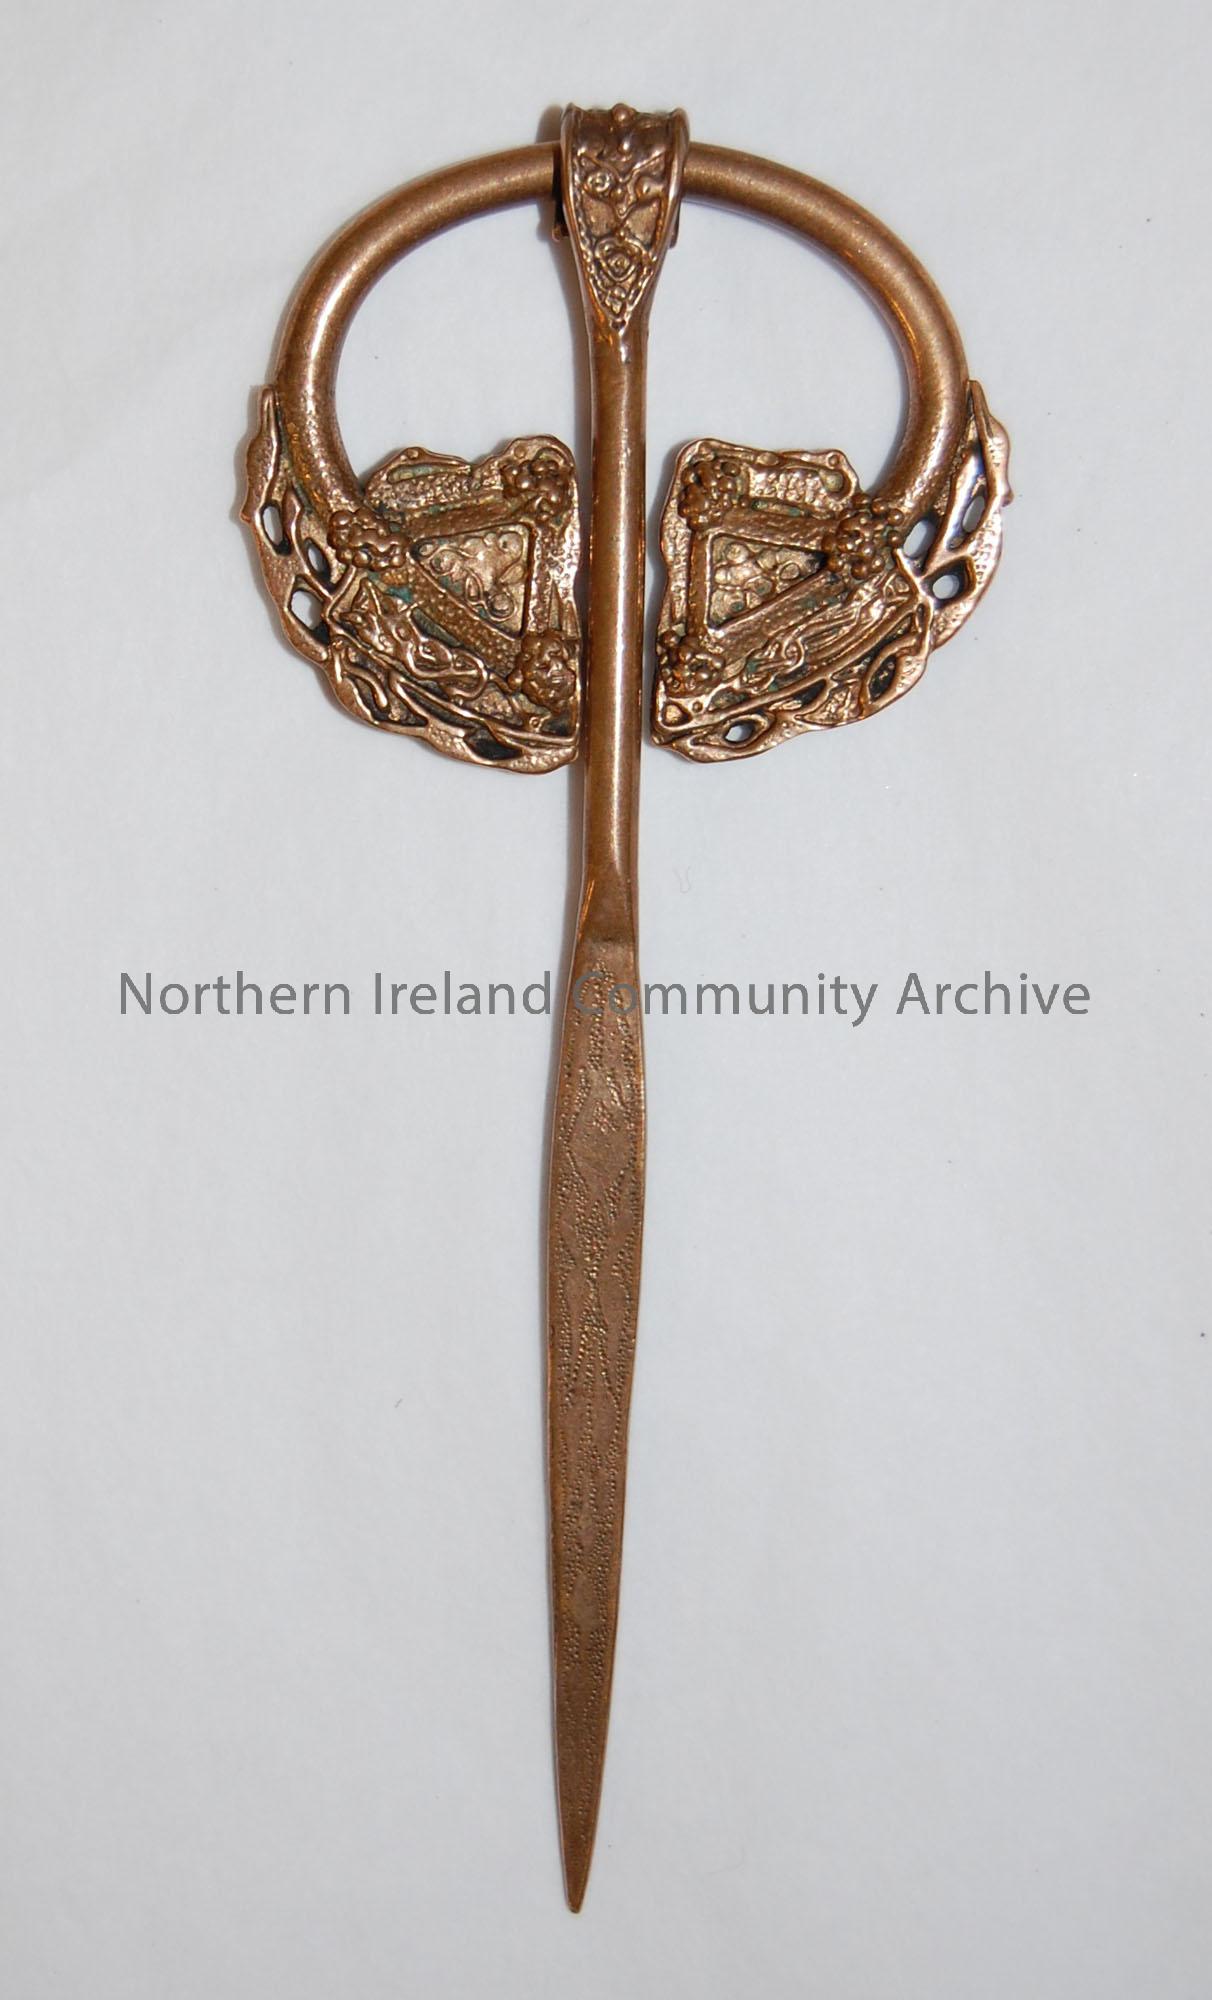 Replica of a brooch found at Loughan, the ‘Dalriada brooch’.